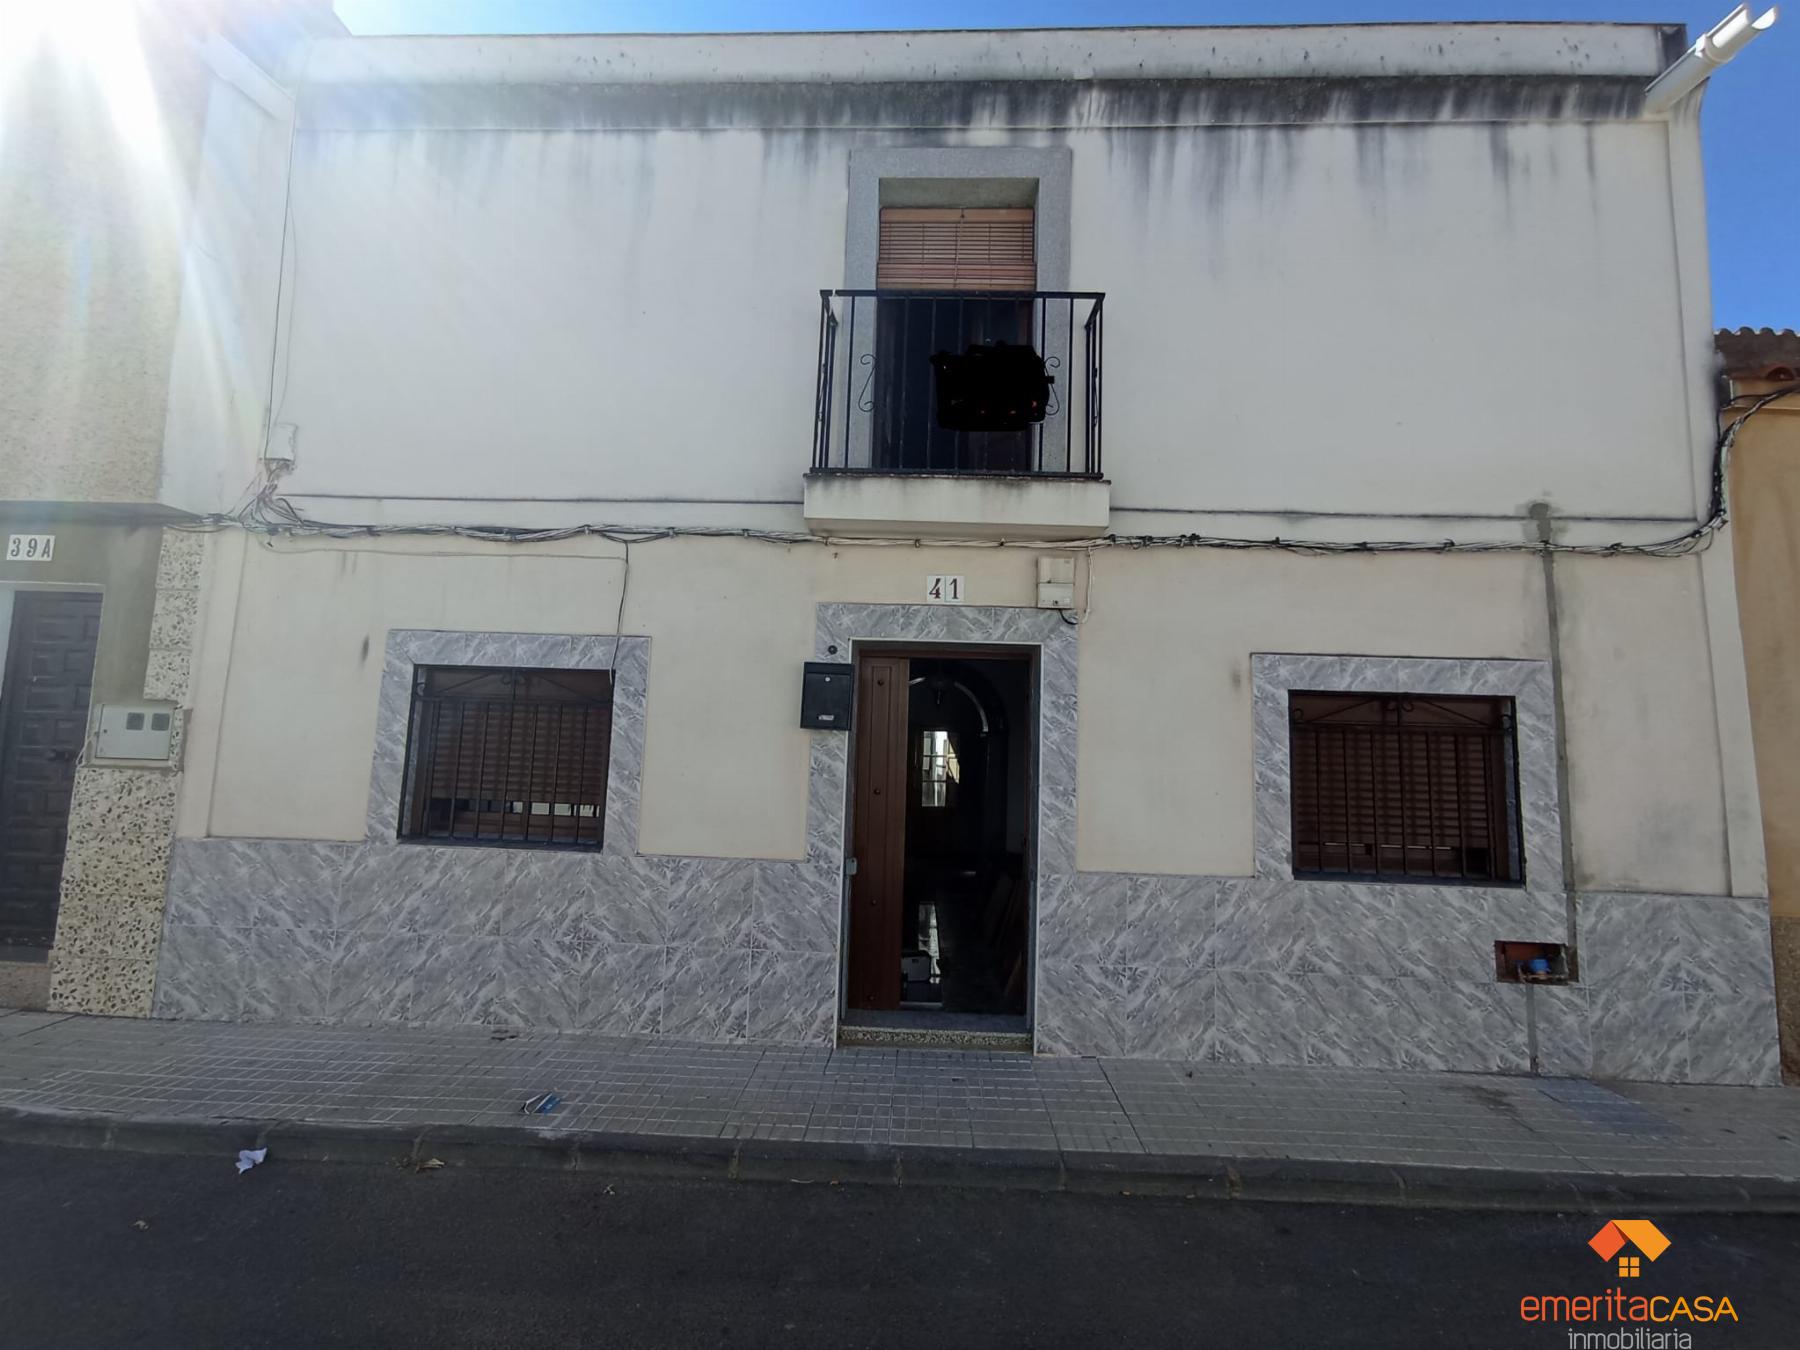 For sale of house in Valverde de Mérida